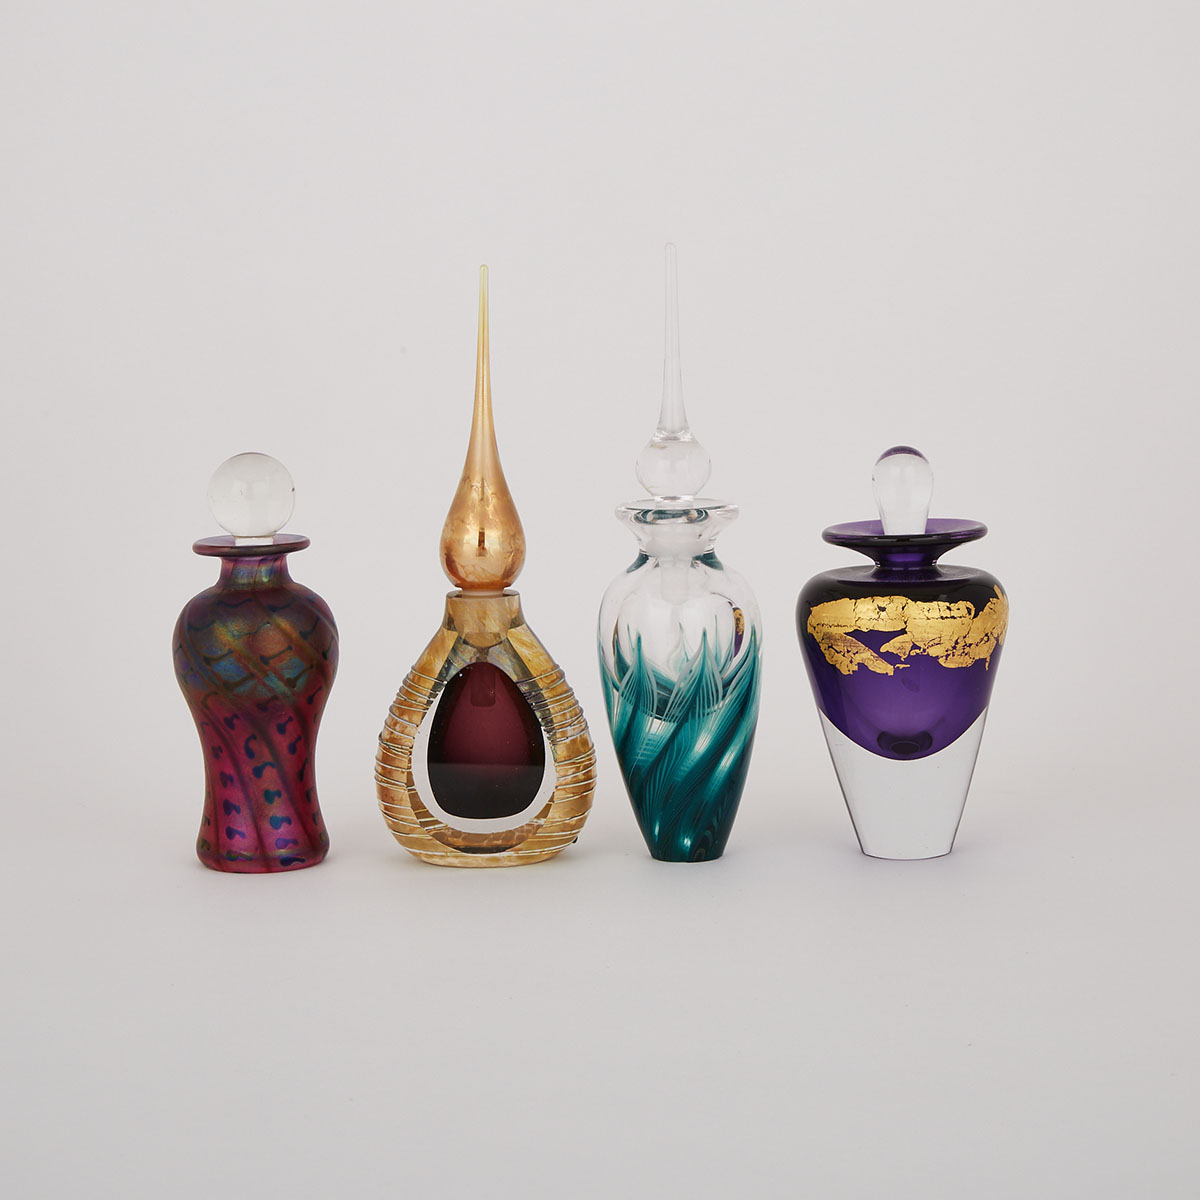 Four Studio Glass Perfume Bottles, Ed Roman, Roger Roland, Thomas Kelly and Robert Held, c.1990-2000